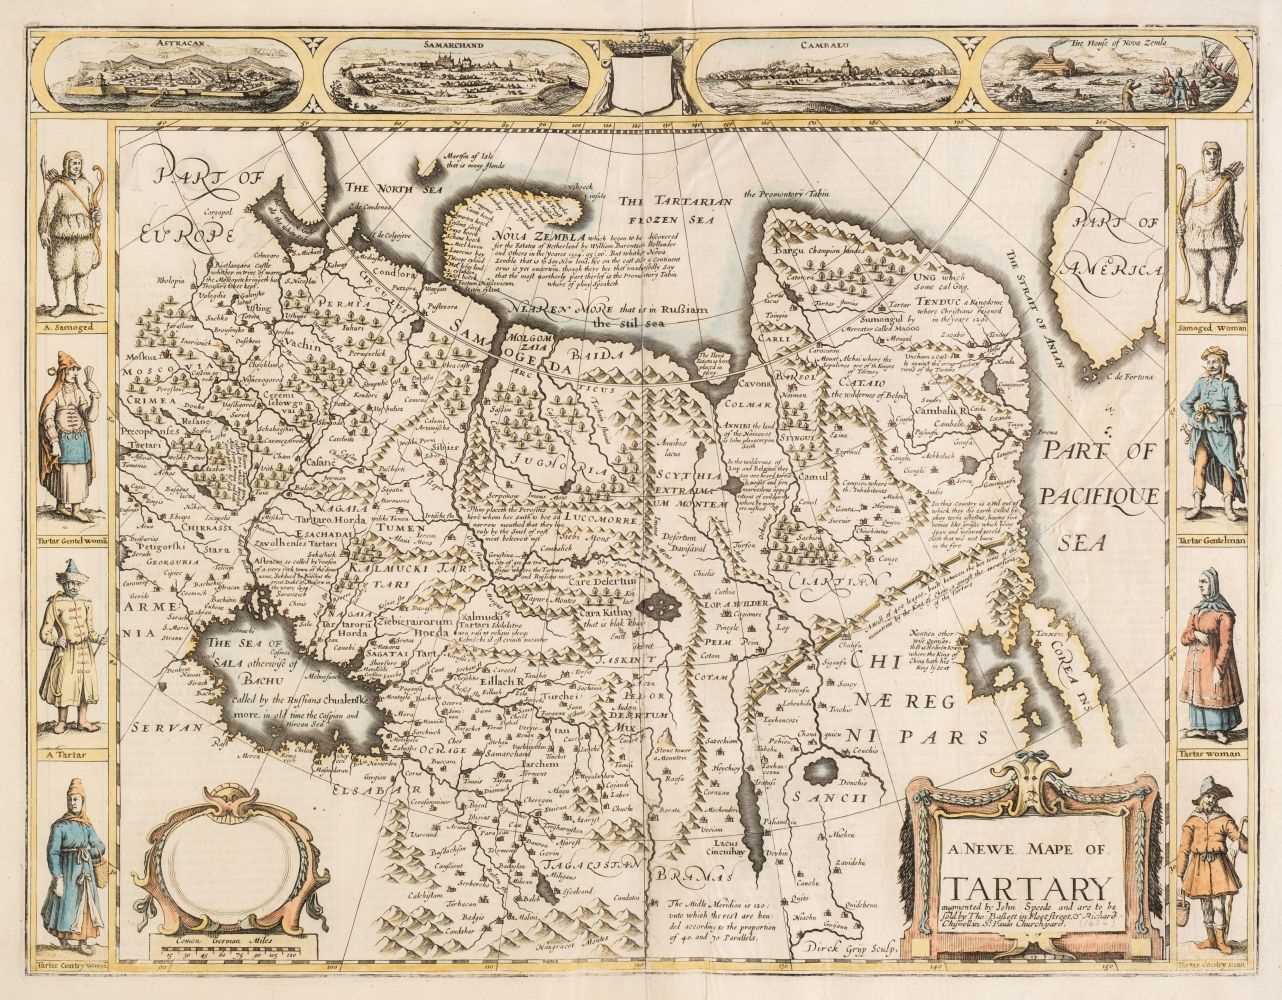 Lot 151 - Tartary. Speed (John), A Newe Mape of Tartary..., 1676